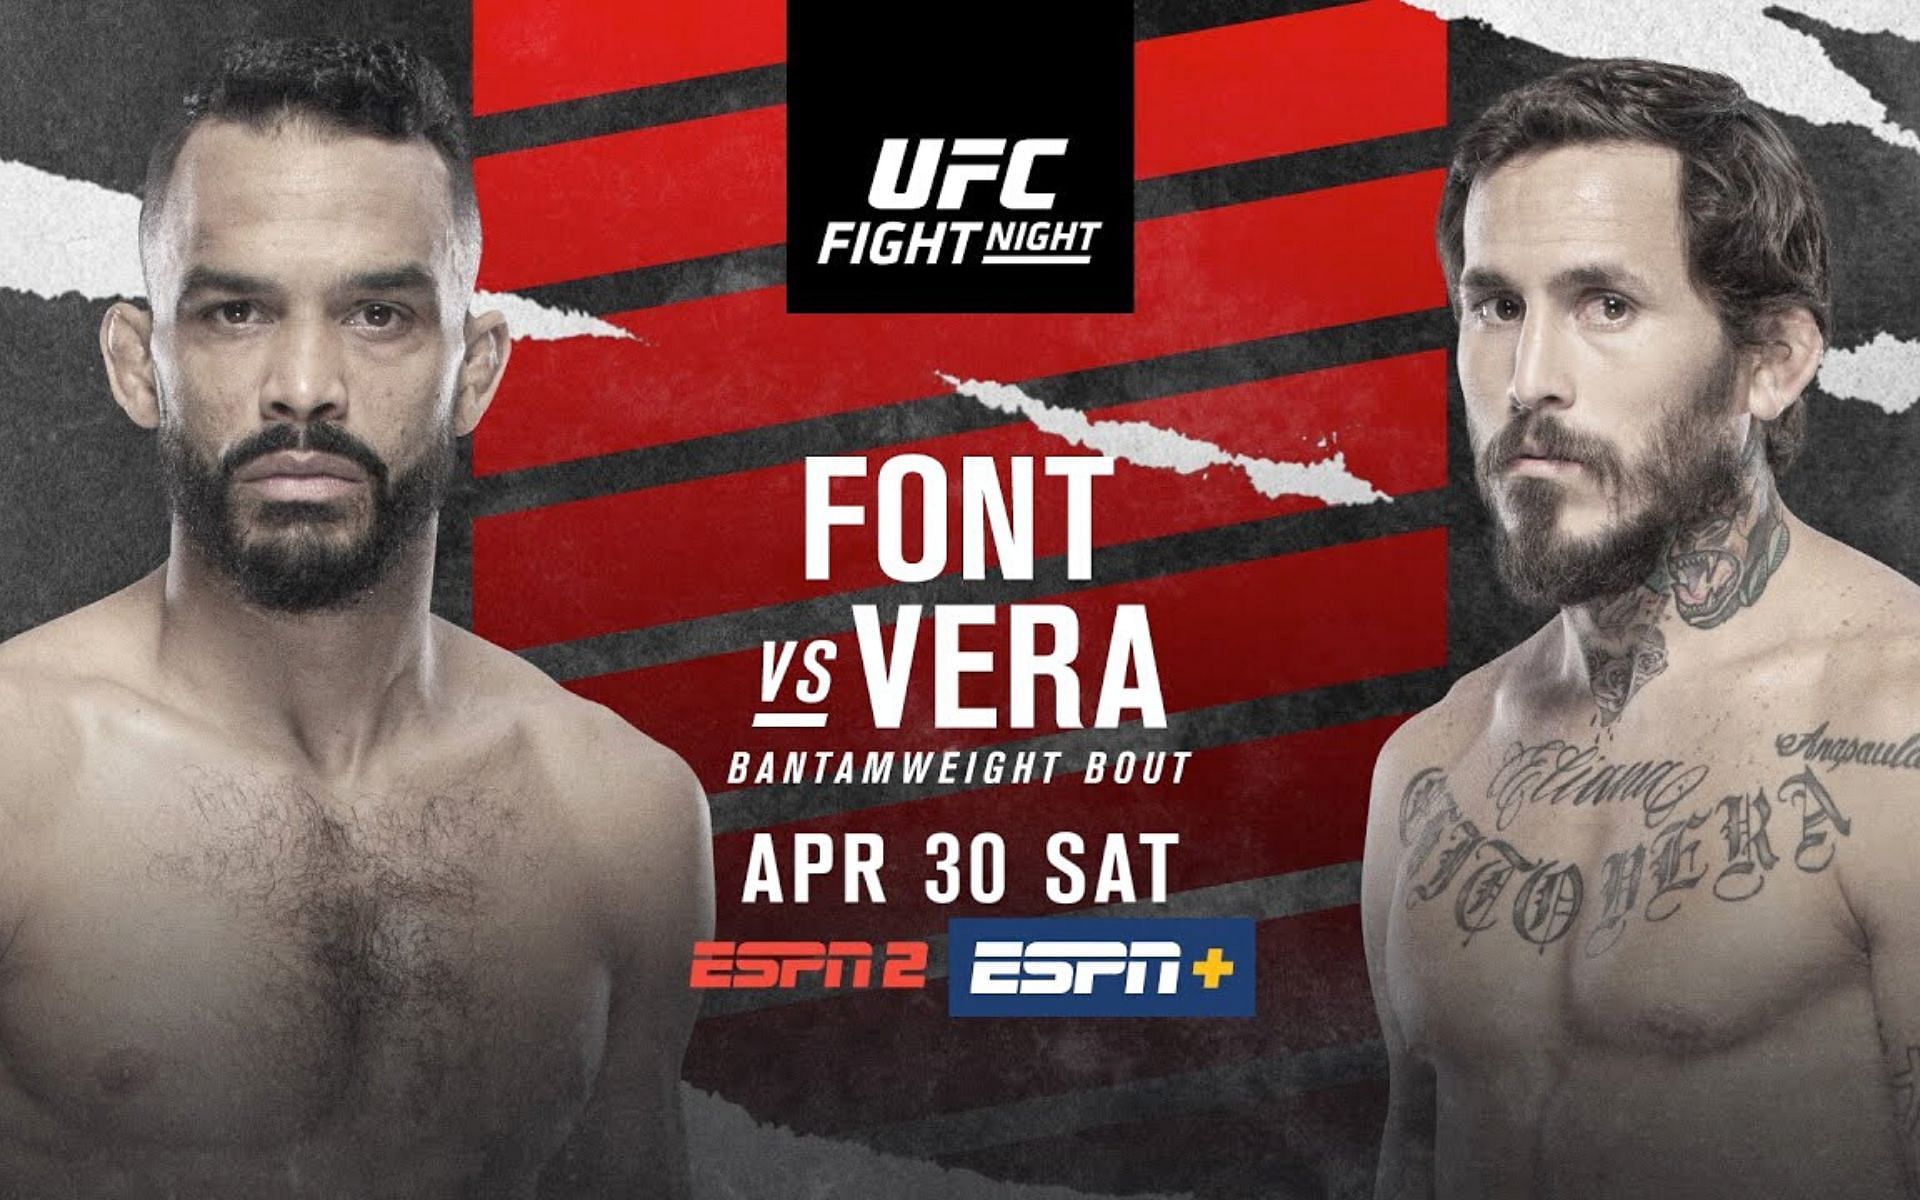 UFC Fight Night: Font vs. Vera [Image courtesy: UFC via YouTube]